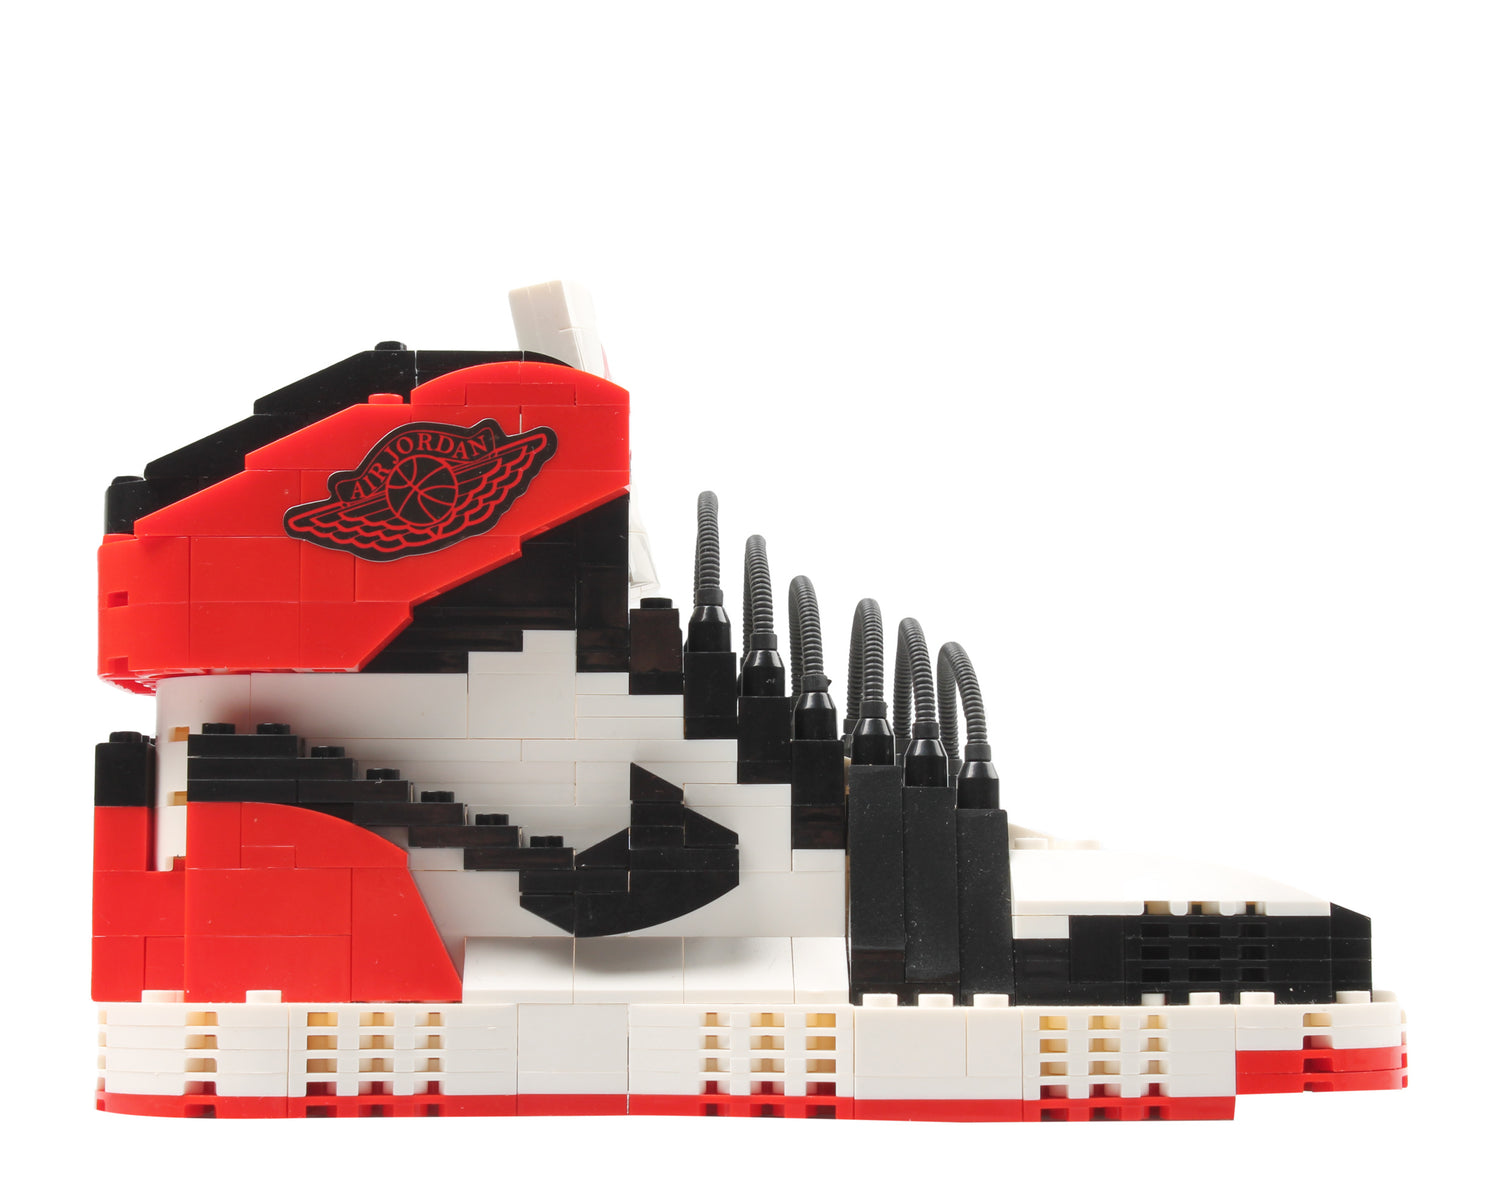 KM 3D AJ1 Black Toe SneakerLego Set - Unassembled